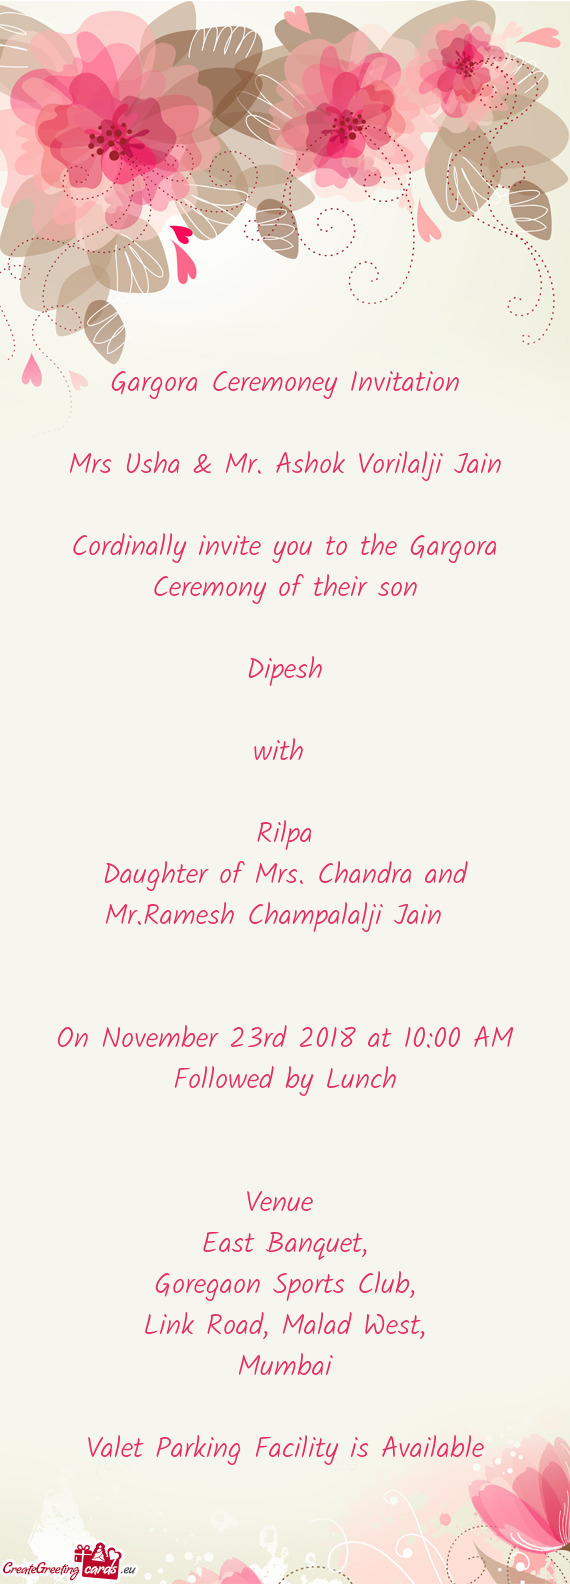 Cordinally invite you to the Gargora Ceremony of their son